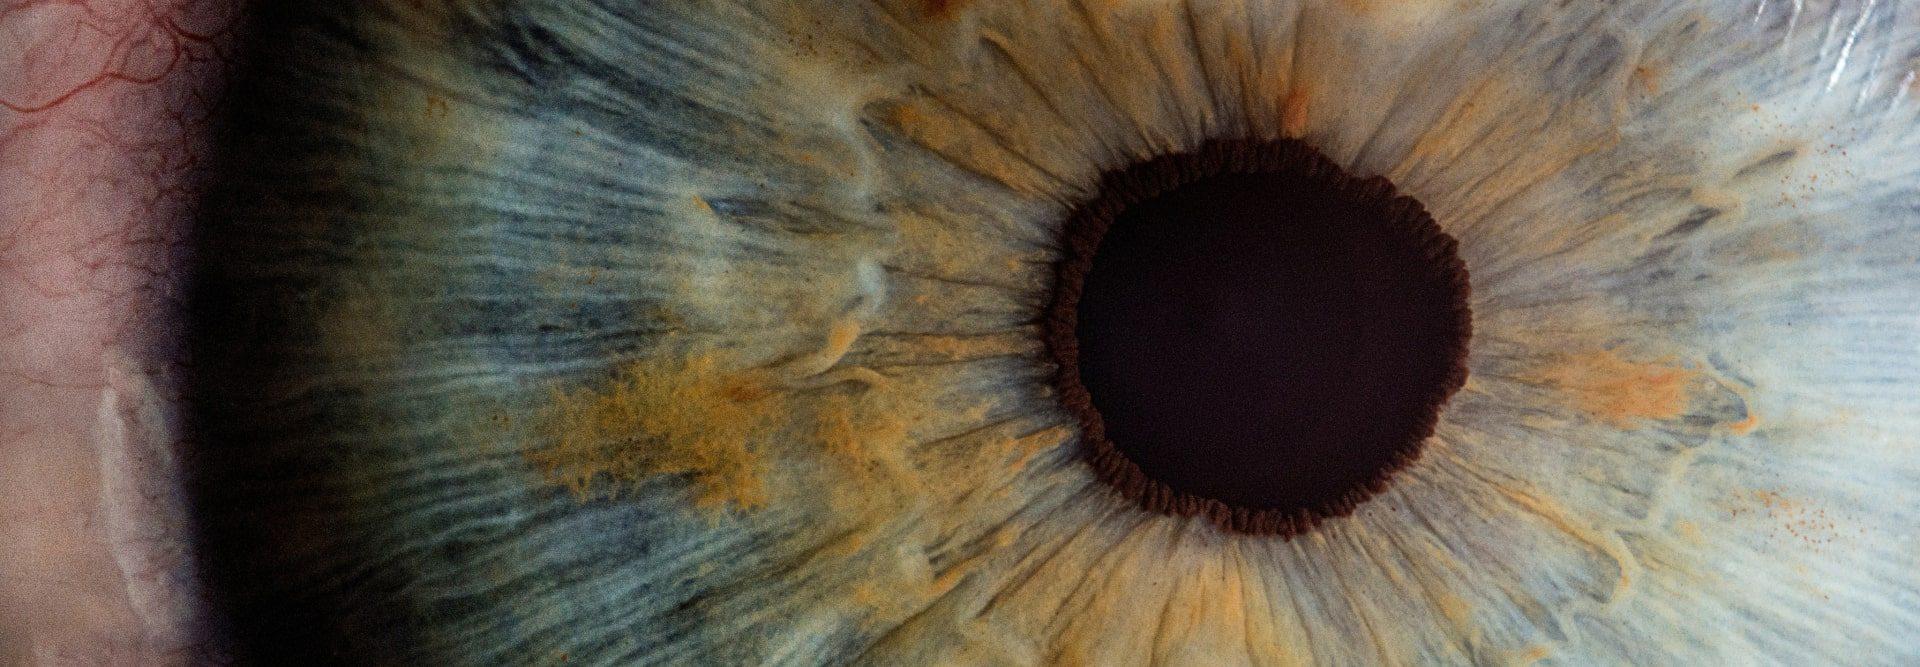 A close up image of a human eye.